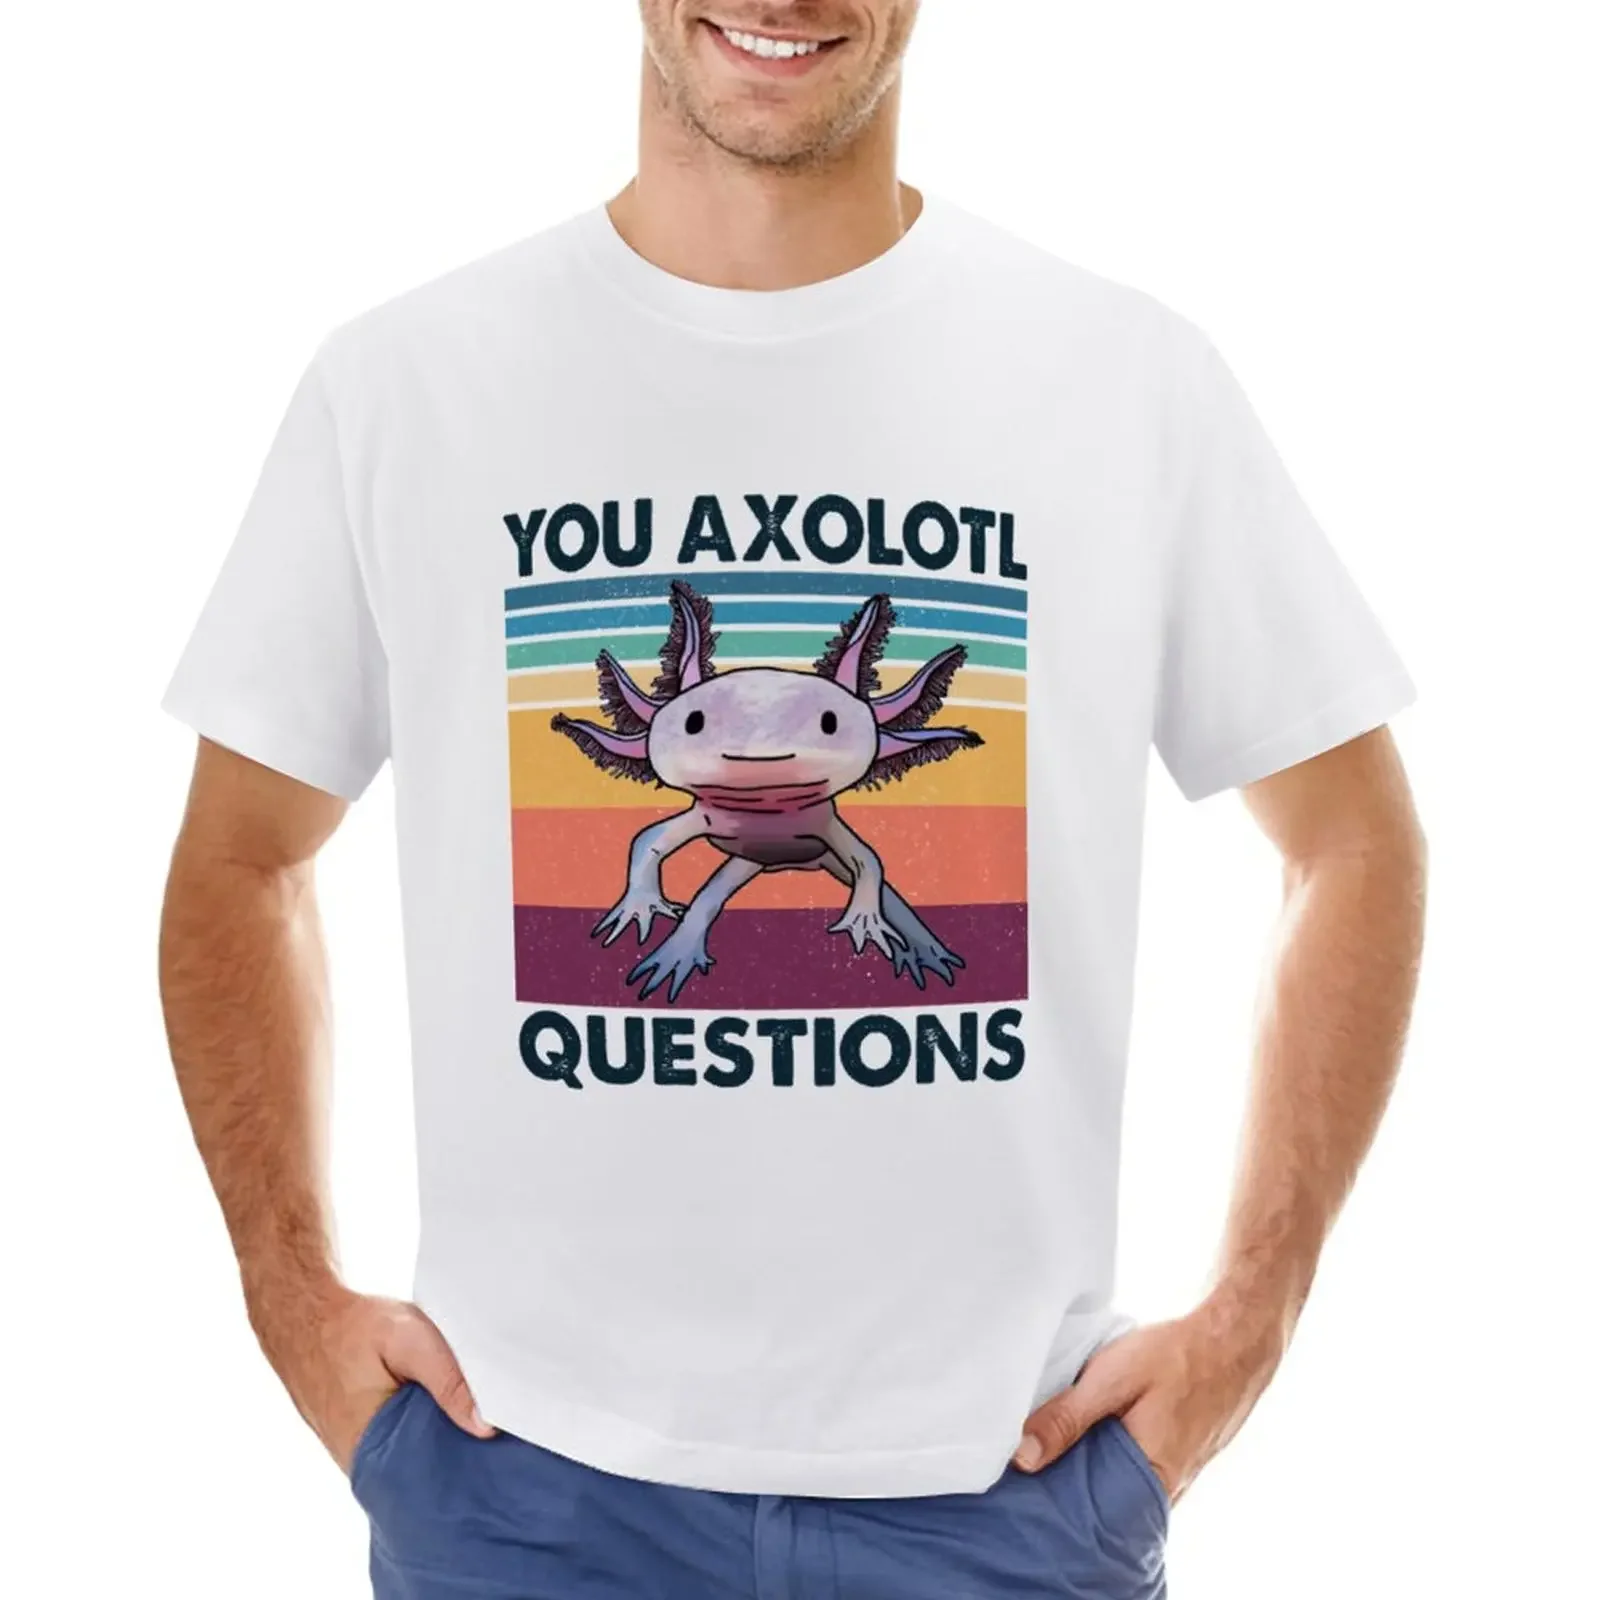 

Retro 90s Axolotl Shirt Funny You Axolotl Questions T-Shirt new edition Short sleeve tee shirts graphic tees plain mens t shirt